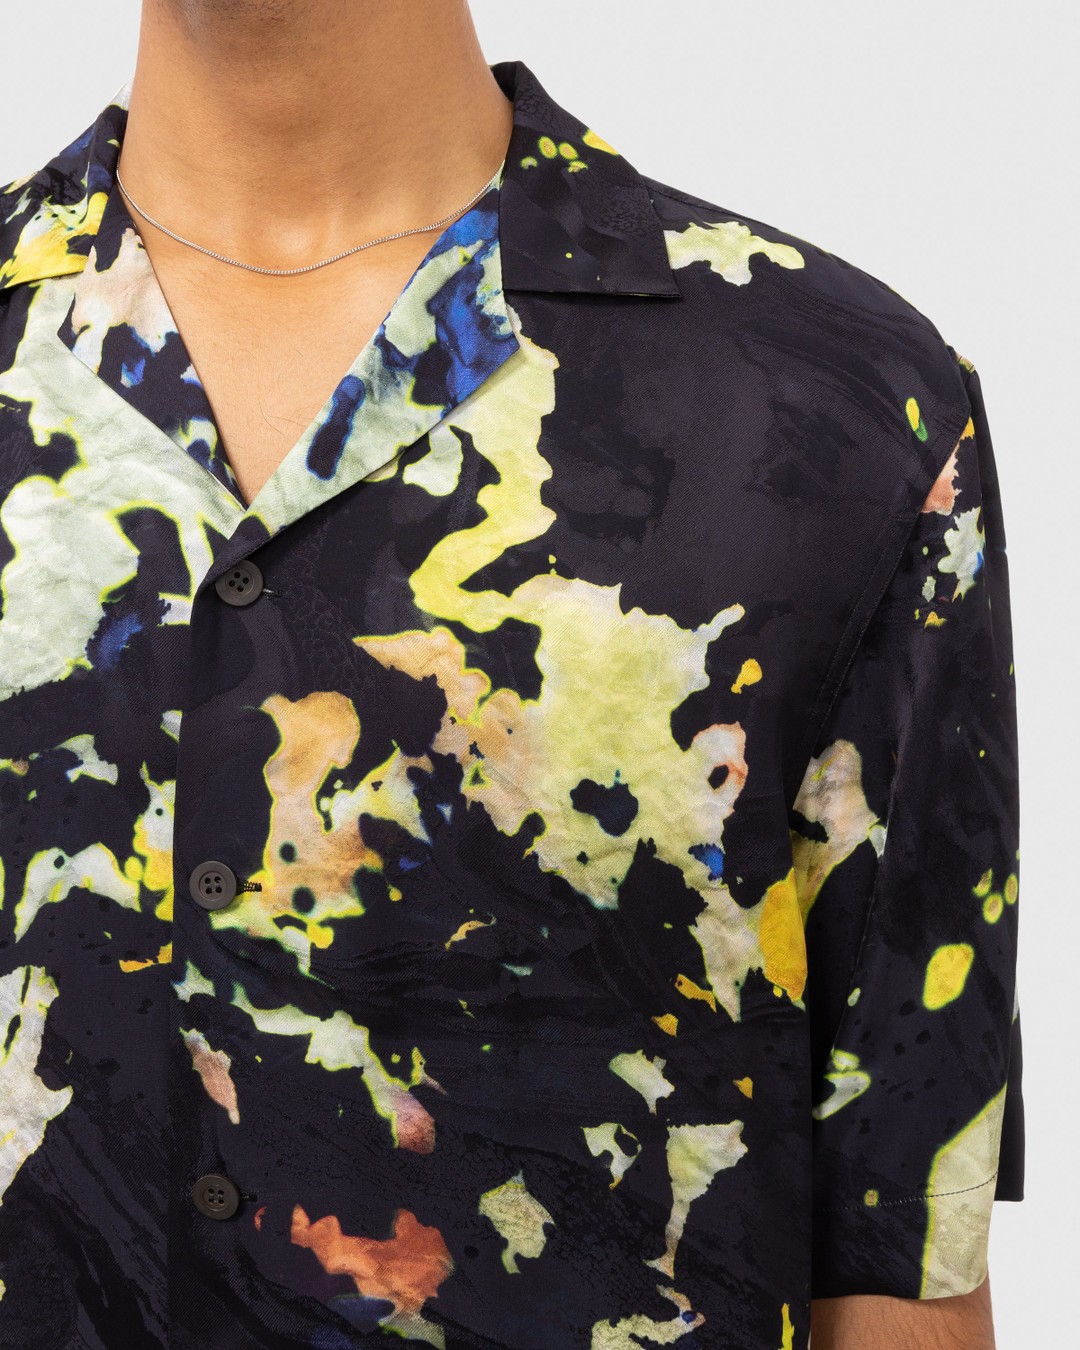 Dries van Noten – Jacquard Cassi Shirt Multi - Shortsleeve Shirts - Multi - Image 5